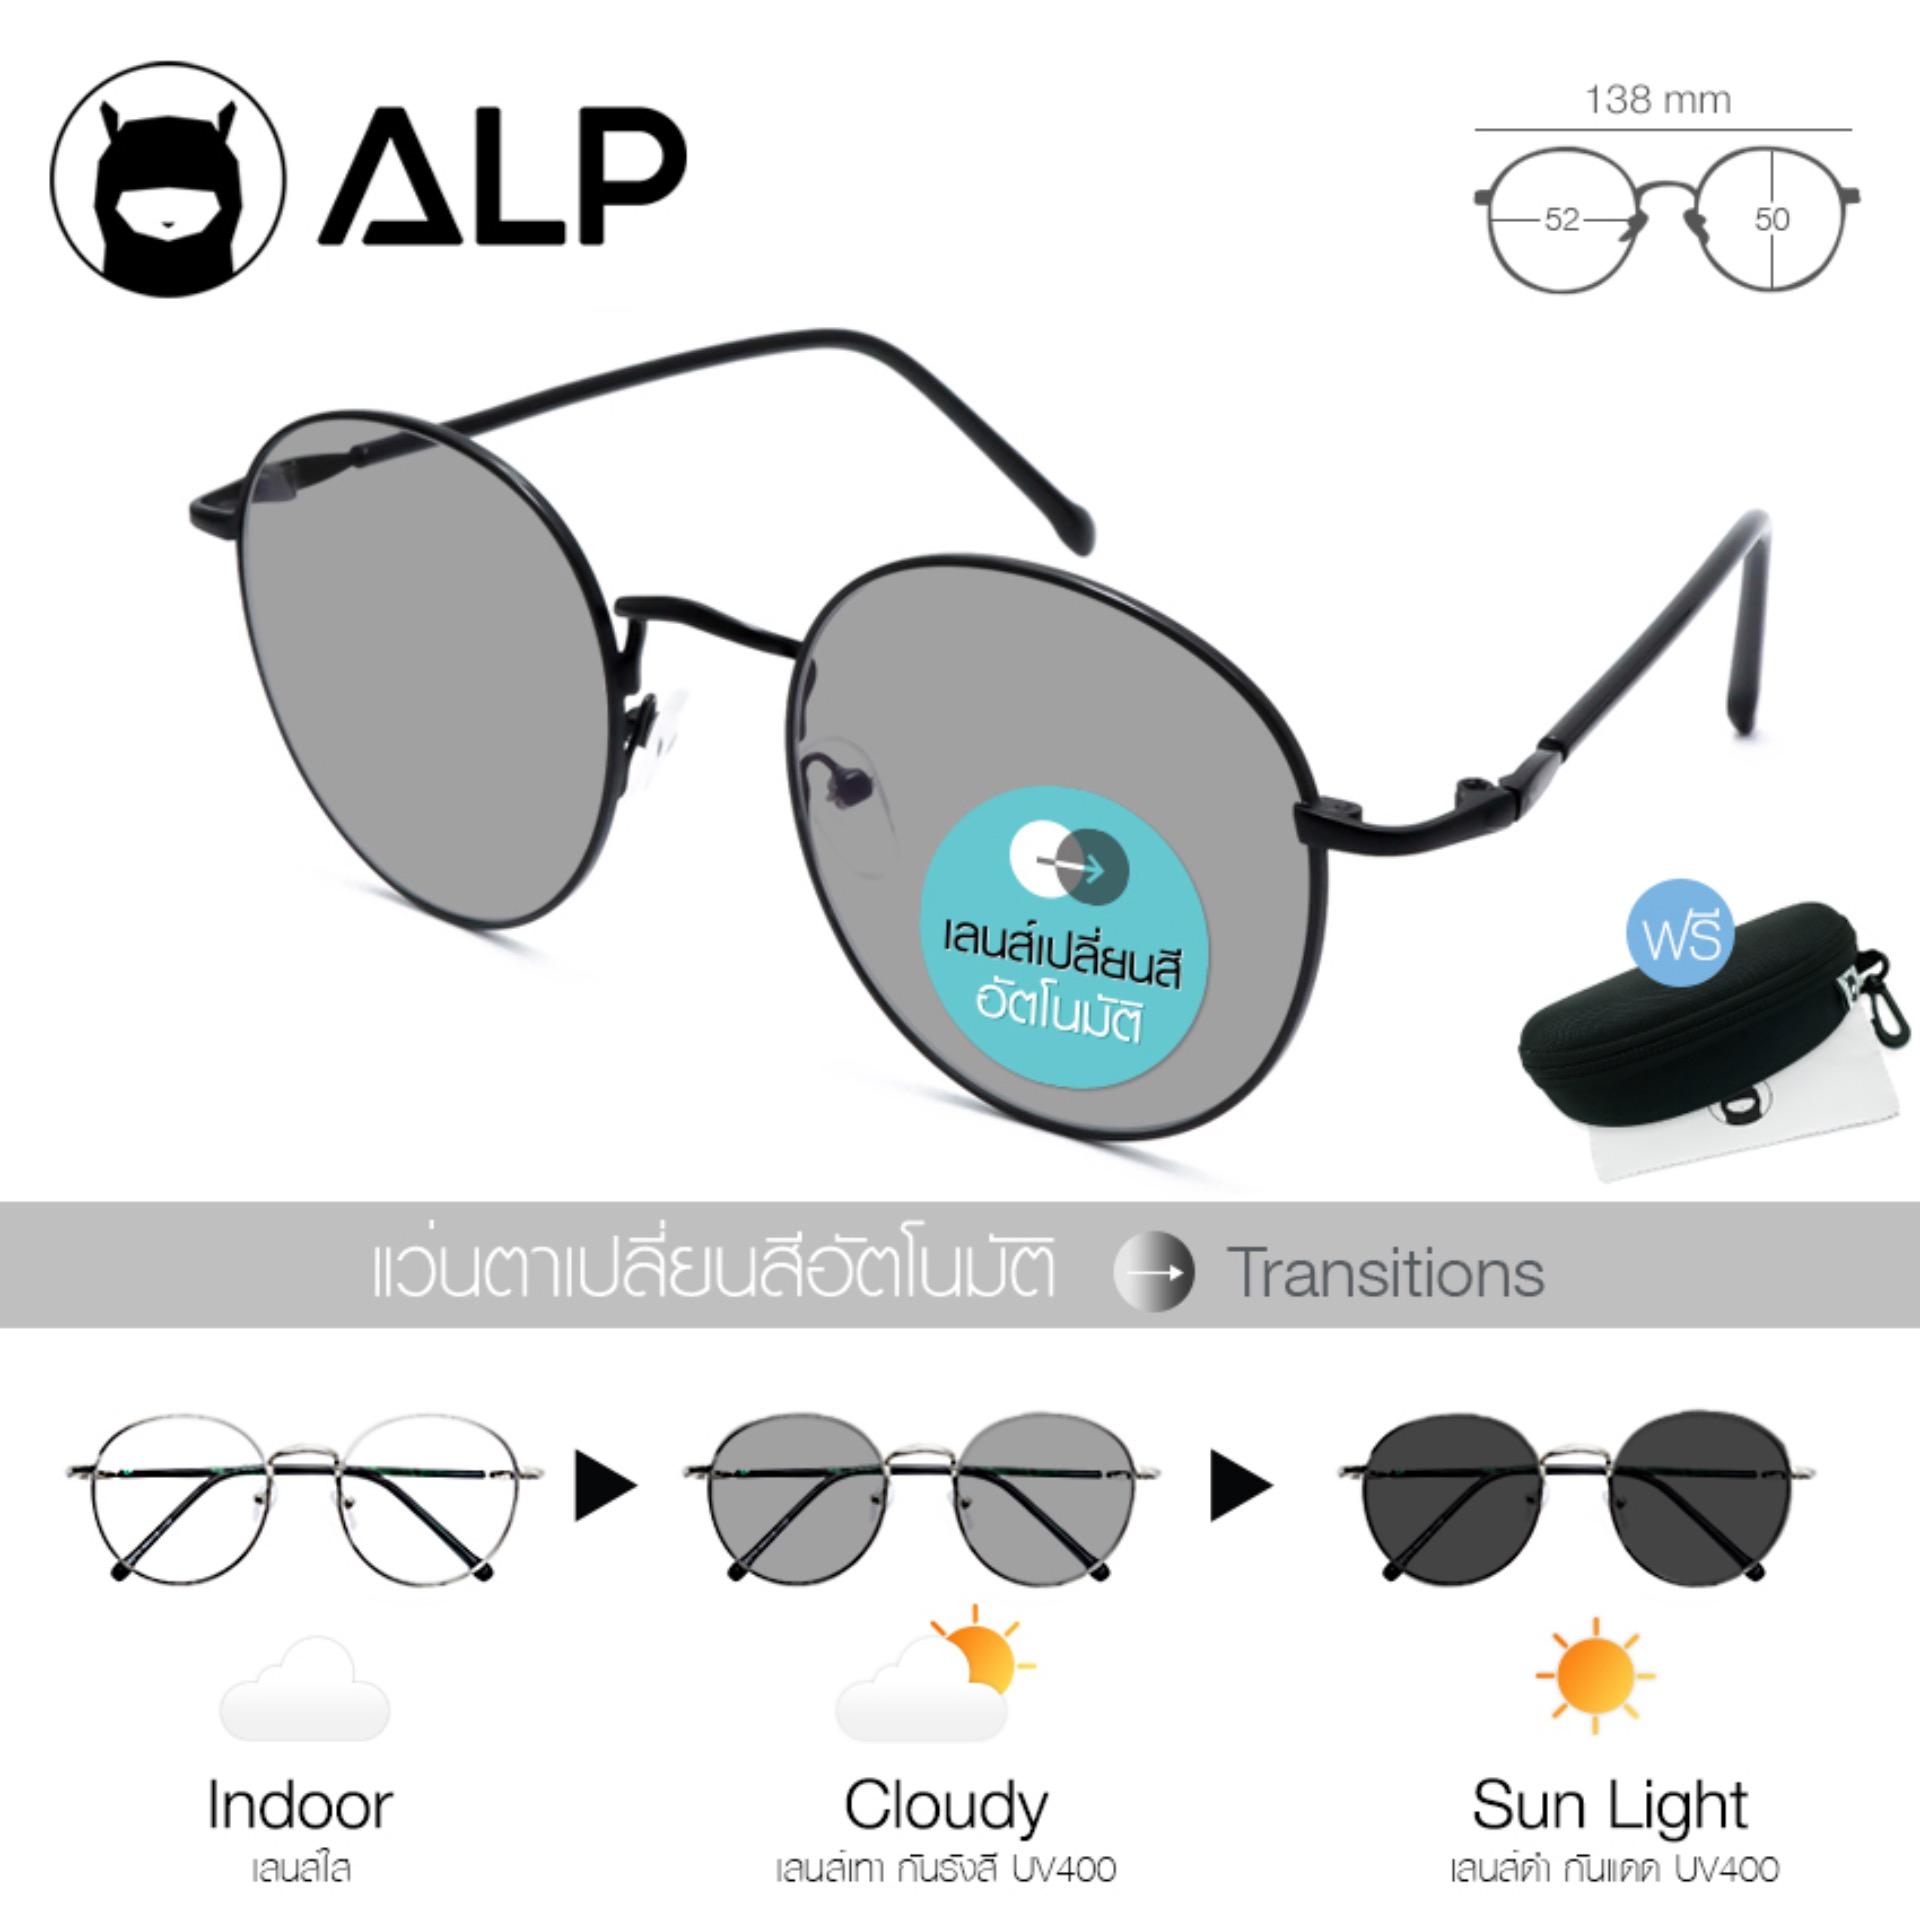 ALP Transition Sunglasses แว่นกันแดด เลนส์ปรับแสง เลนส์ออโต้ Auto Light-adjusting Lens กัน UV 400 Vintage Style รุ่น ALP-SN0003